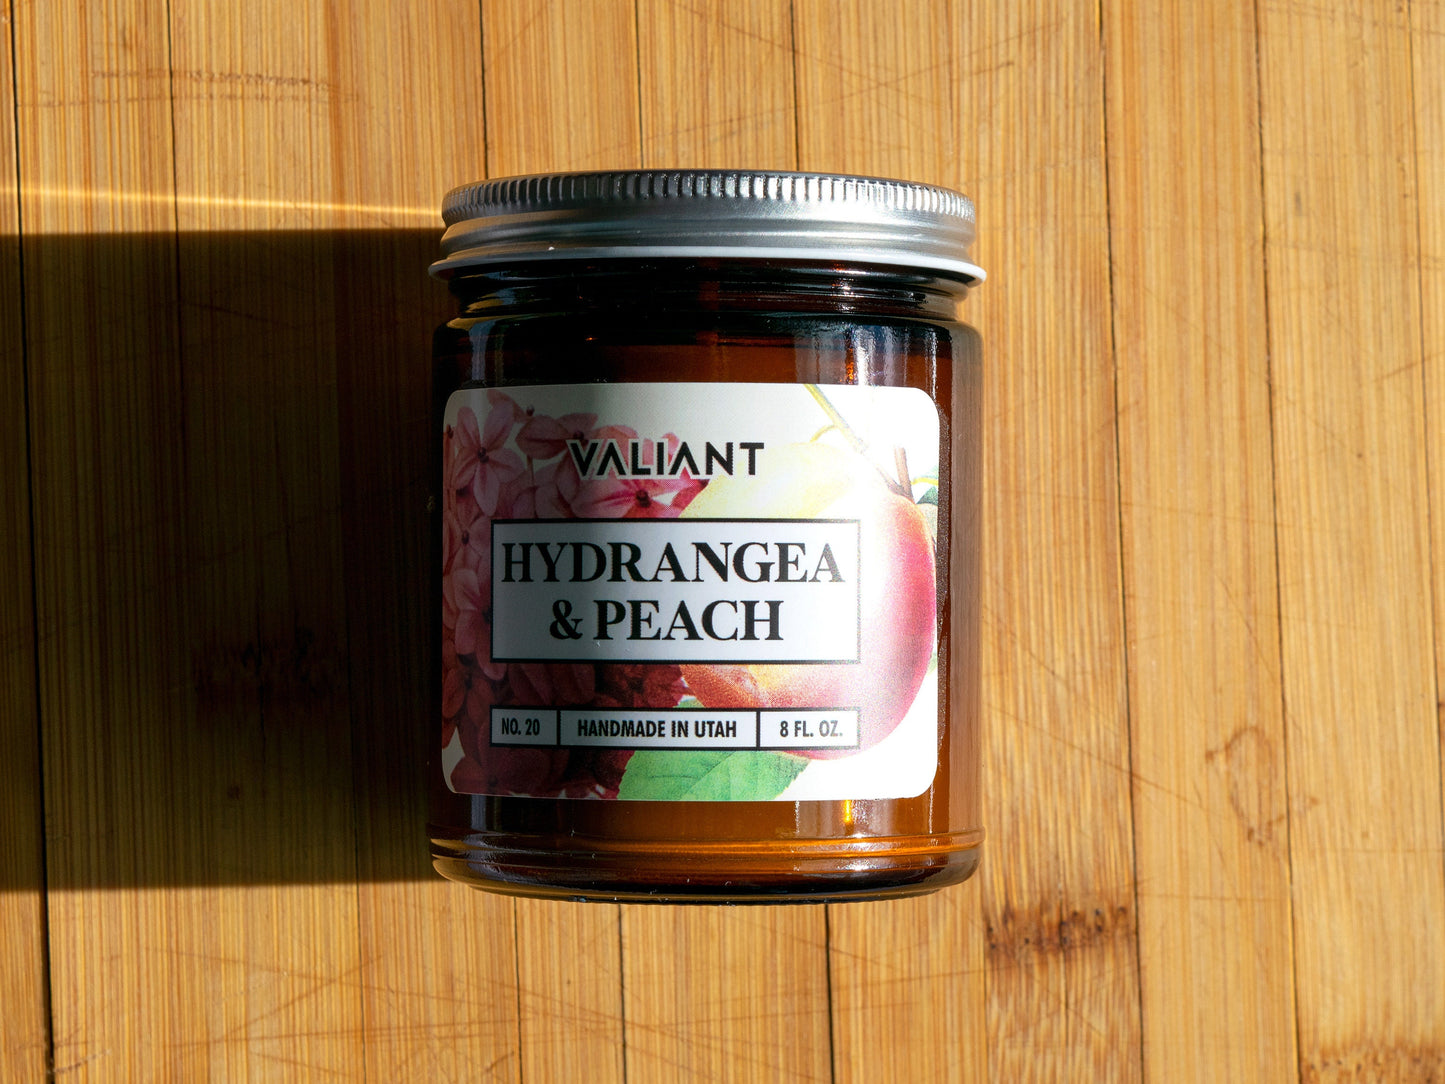 Hydrangea & Peach Botanical Candle in Amber Glass